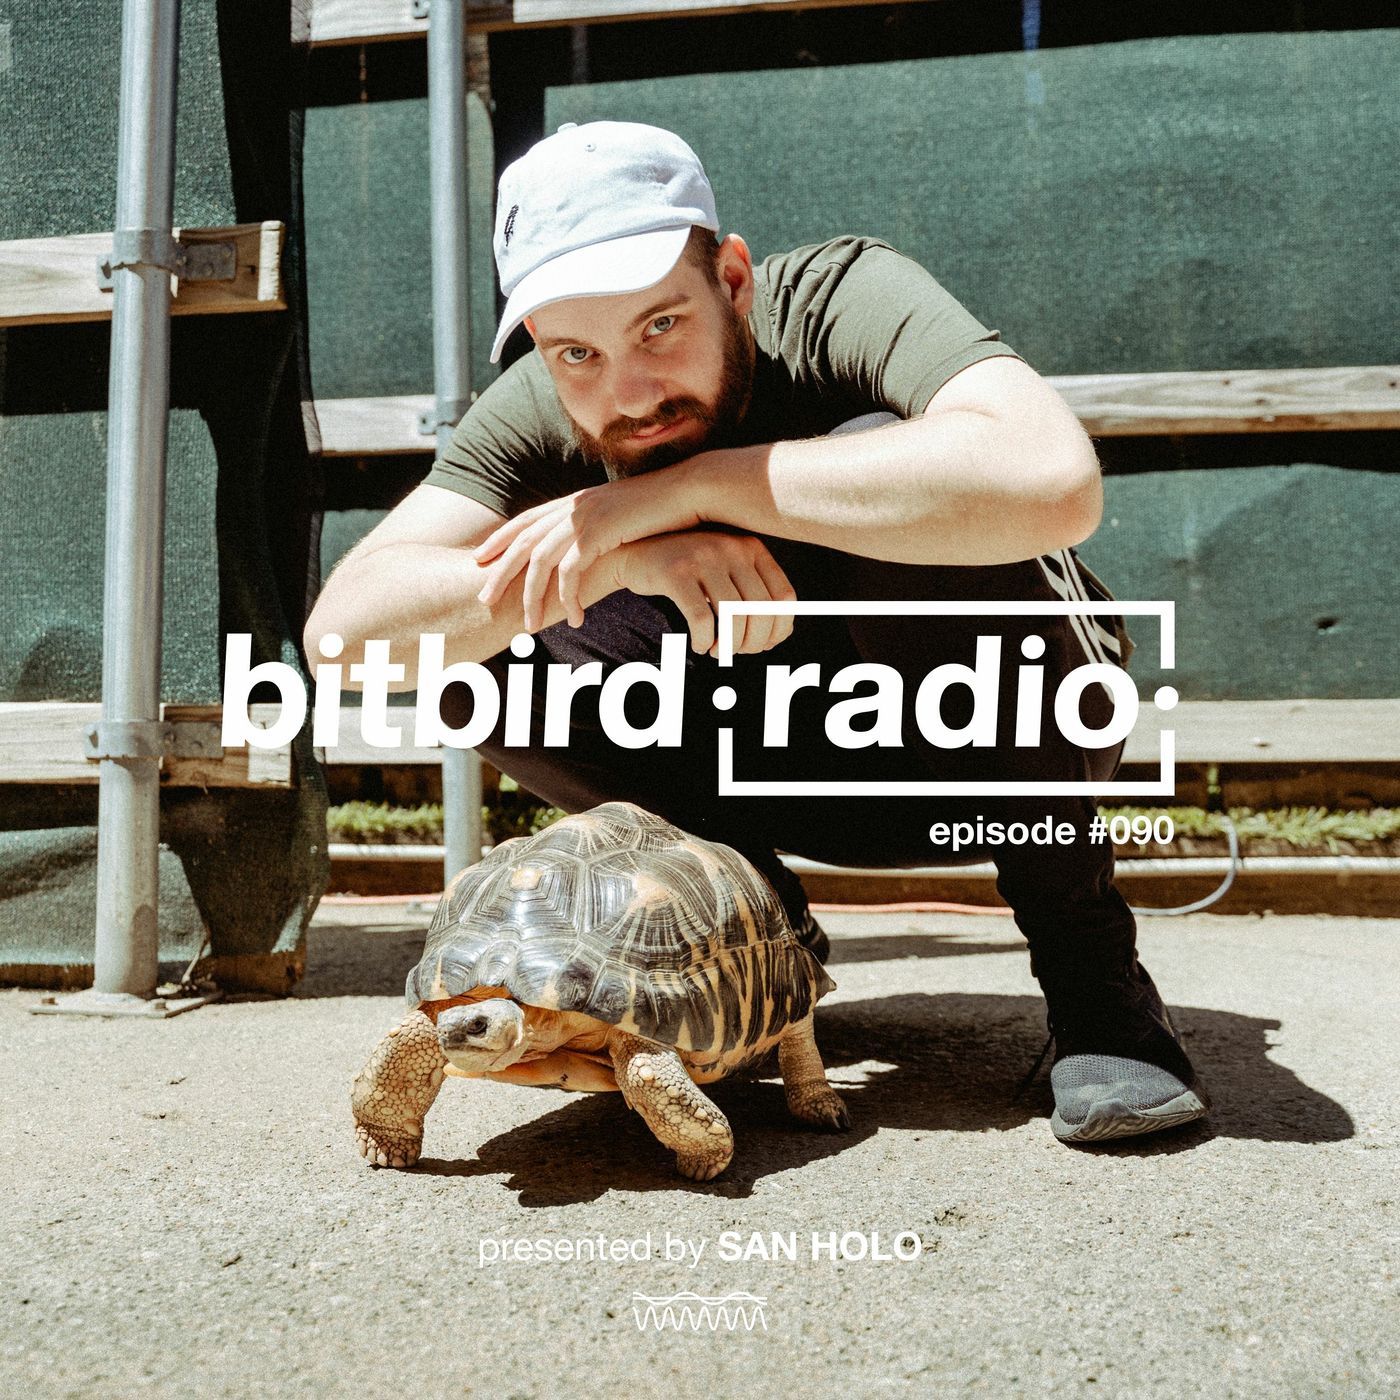 San Holo Presents: bitbird radio #090